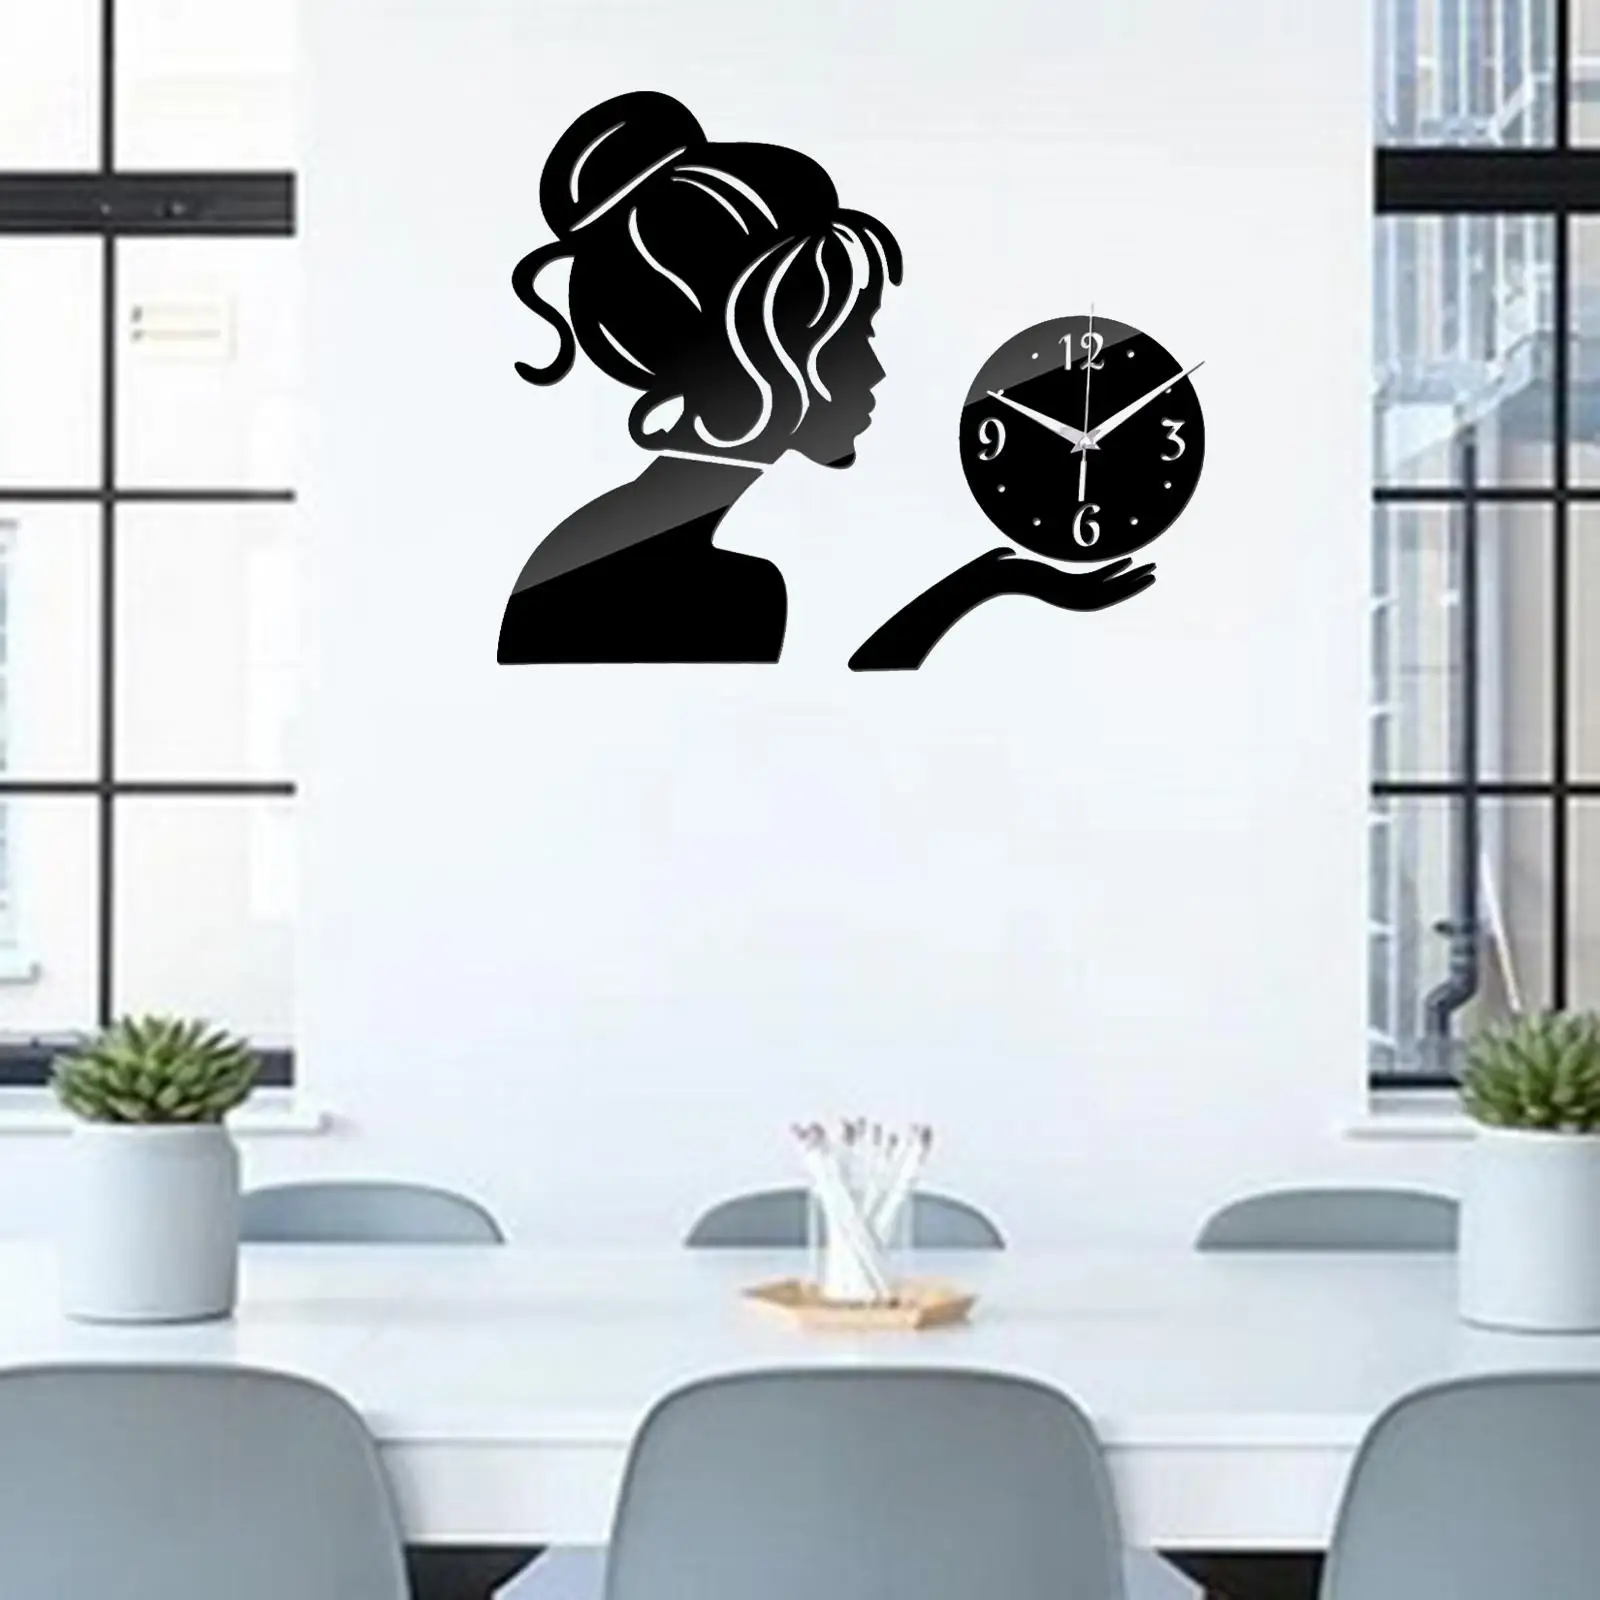 Creative Wall Hanging Clocks 3D DIY Sticker 15cm Diameter Acrylic Mirror Mute Clocks for Hotel Bar Study Decoration Wall Decor